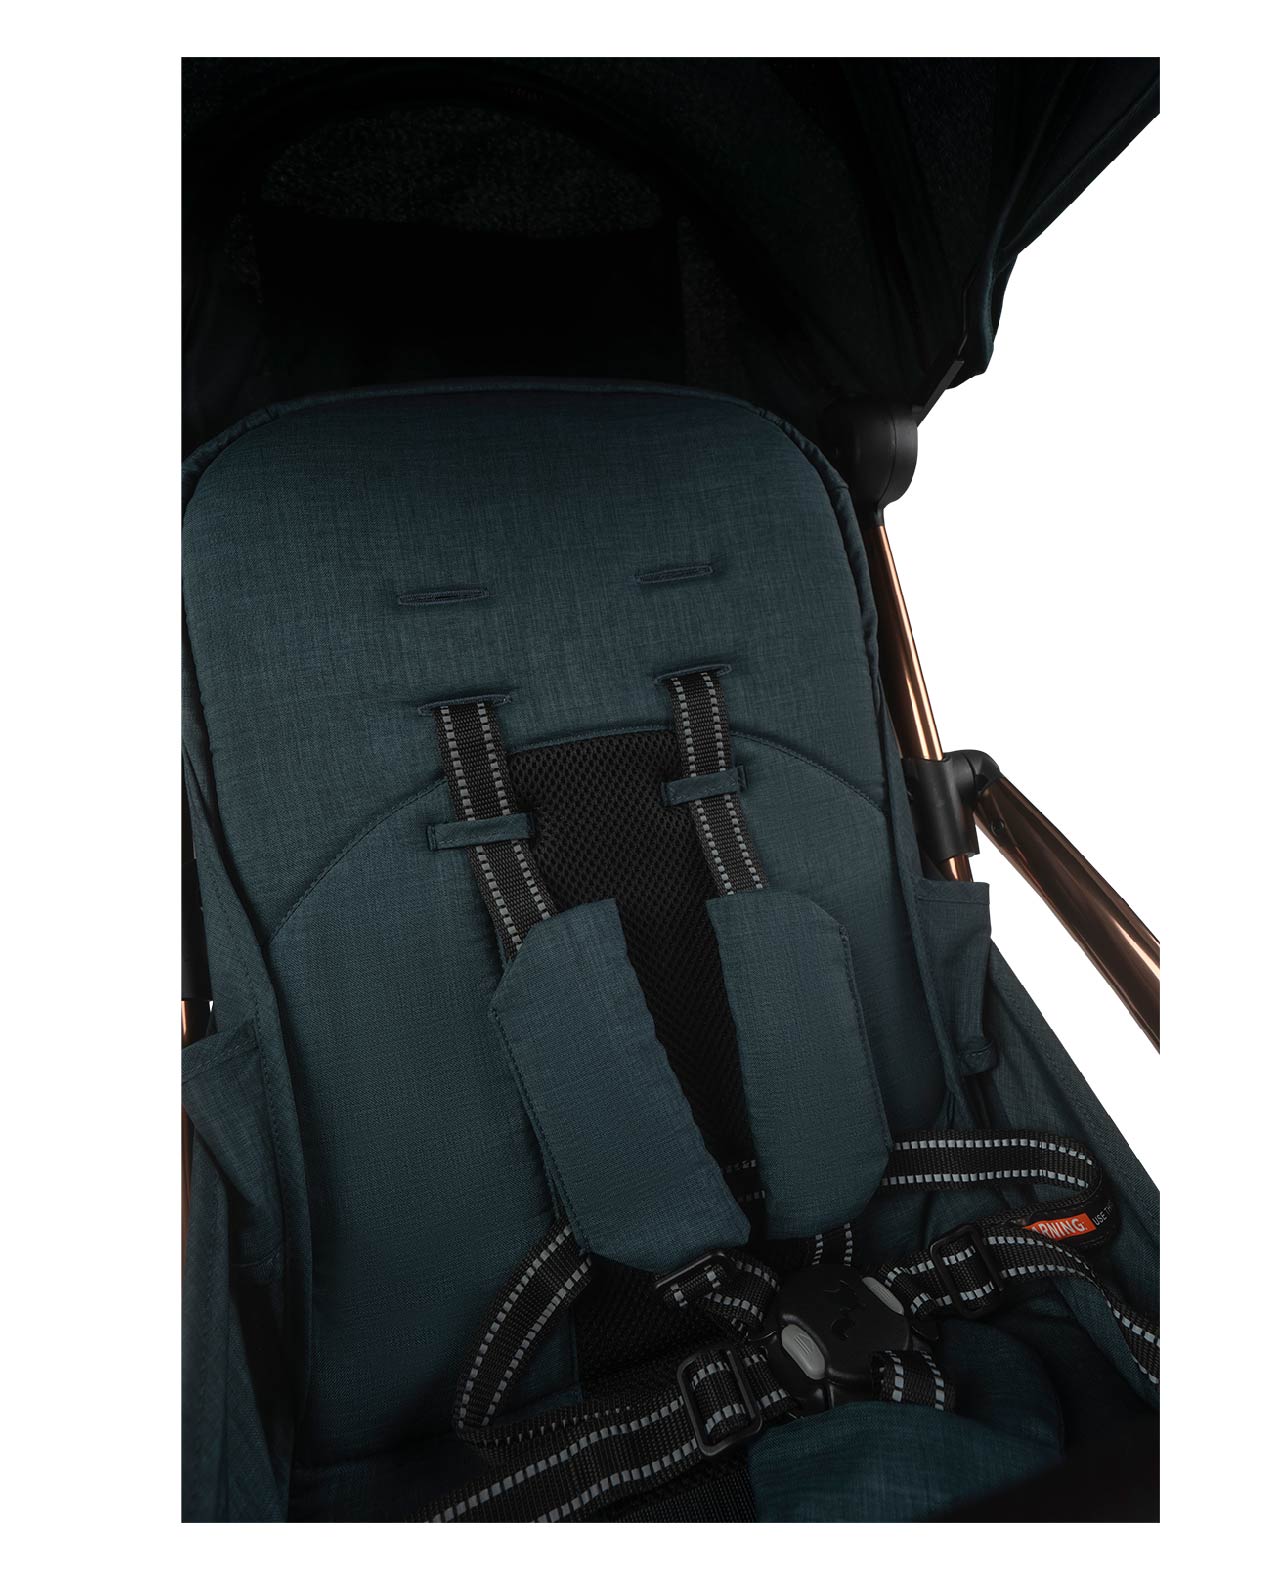 Influencer Air Twin Stroller Bundle : Denim Blue Stroller + Denim Blue Stroller